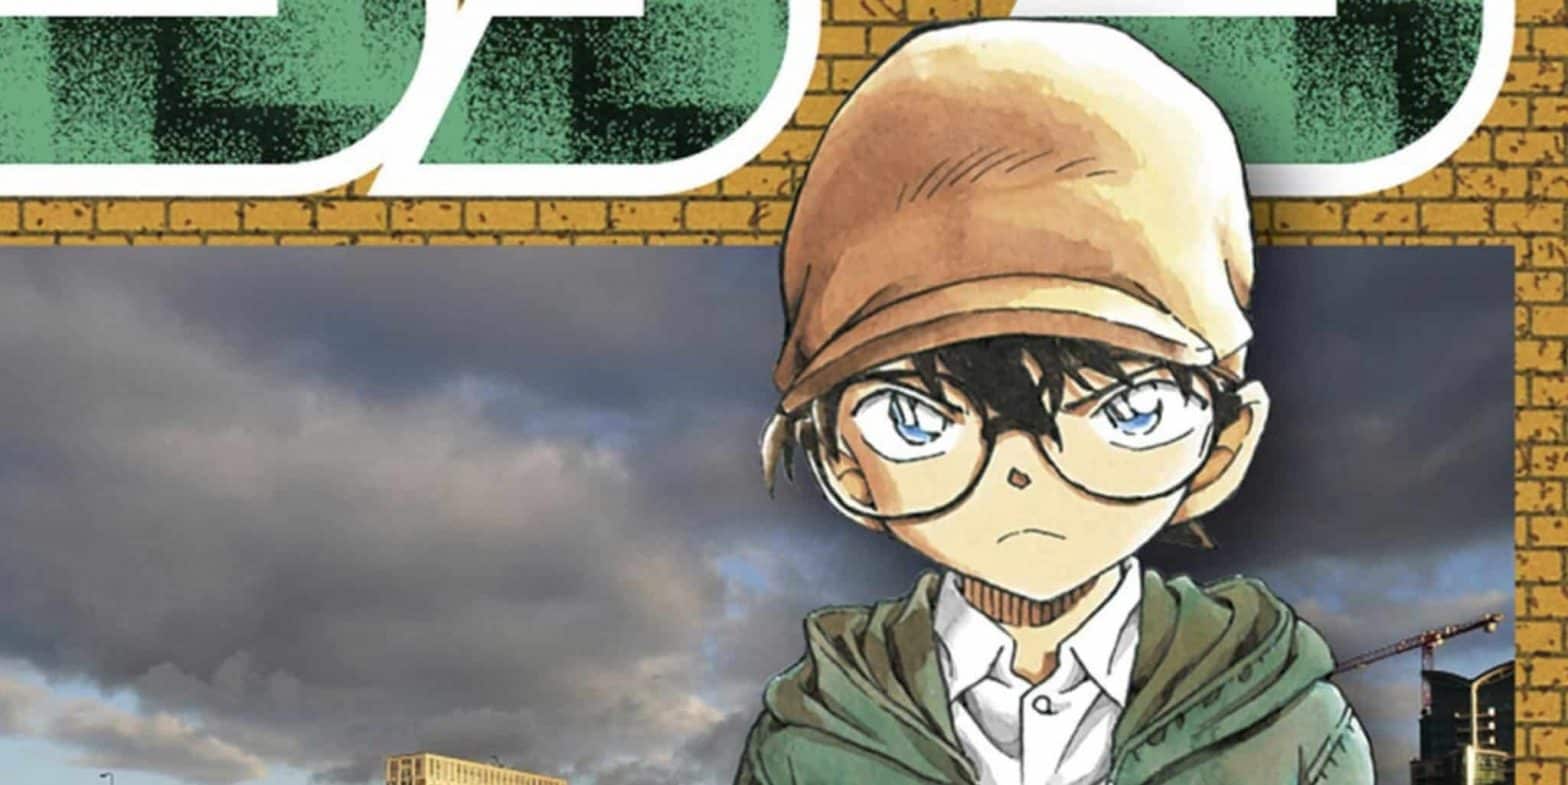 Detective Conan Chapter 1118 Release Date Details